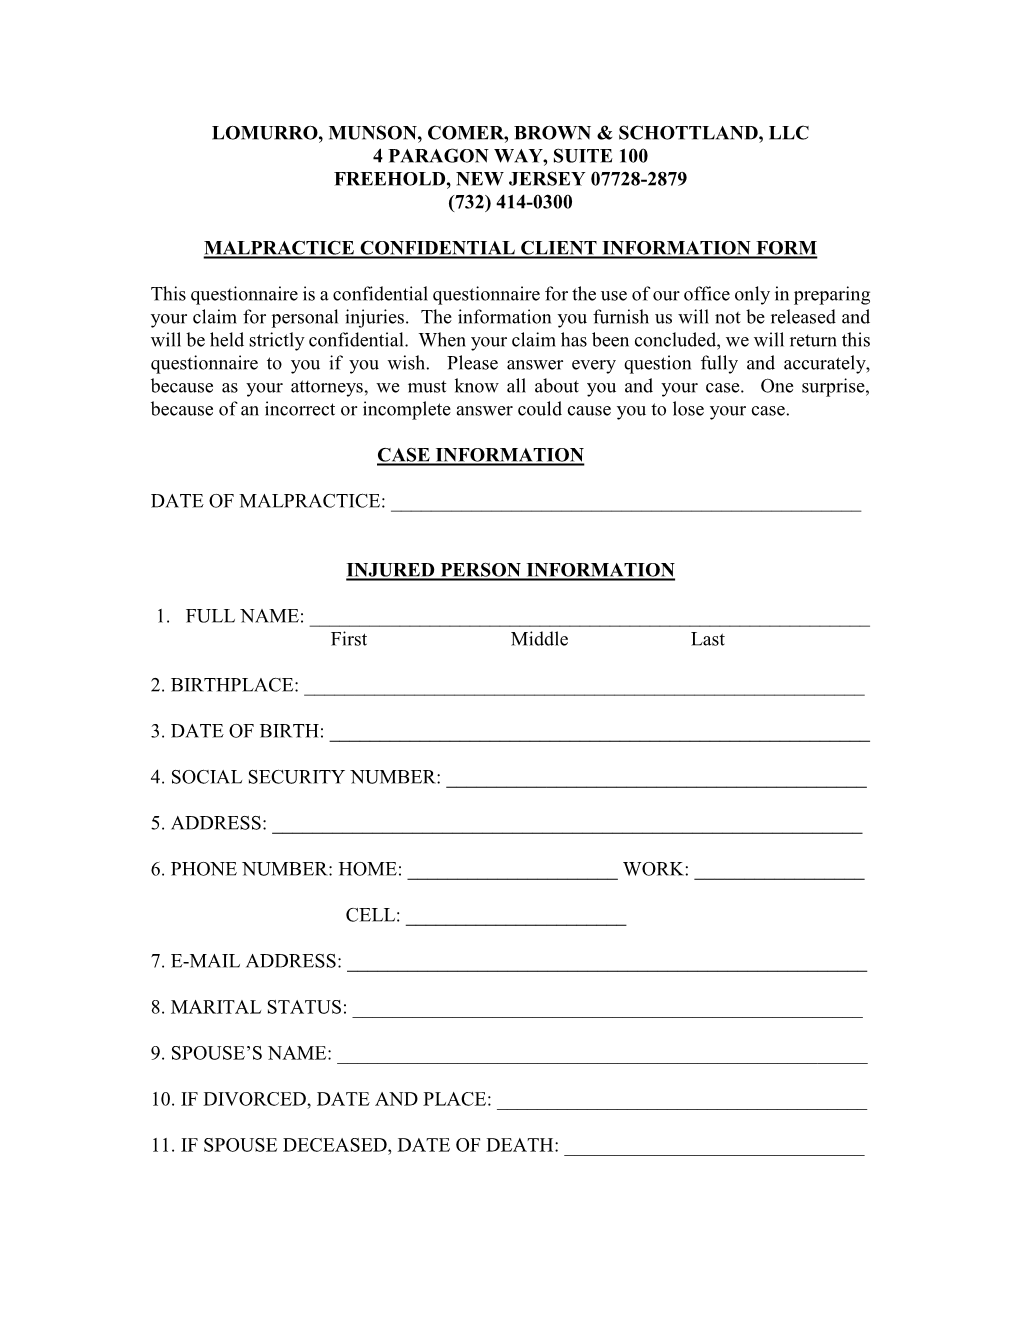 Medical Malpractice Client Information Form